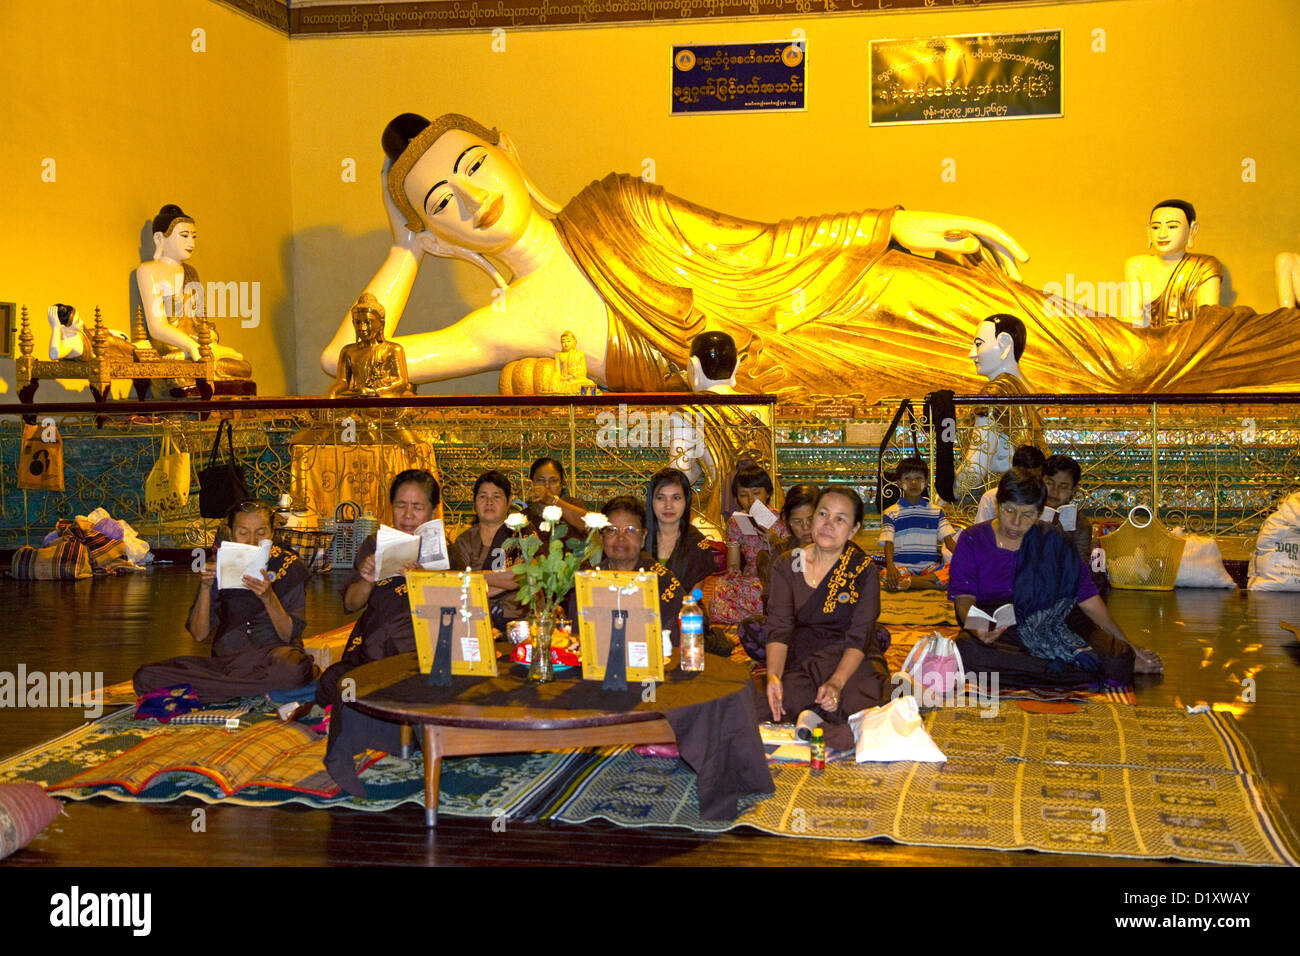 Laying buddha at the Shwedagon Paya located in (Rangoon)Yangon, (Burma) Myanmar. Stock Photo